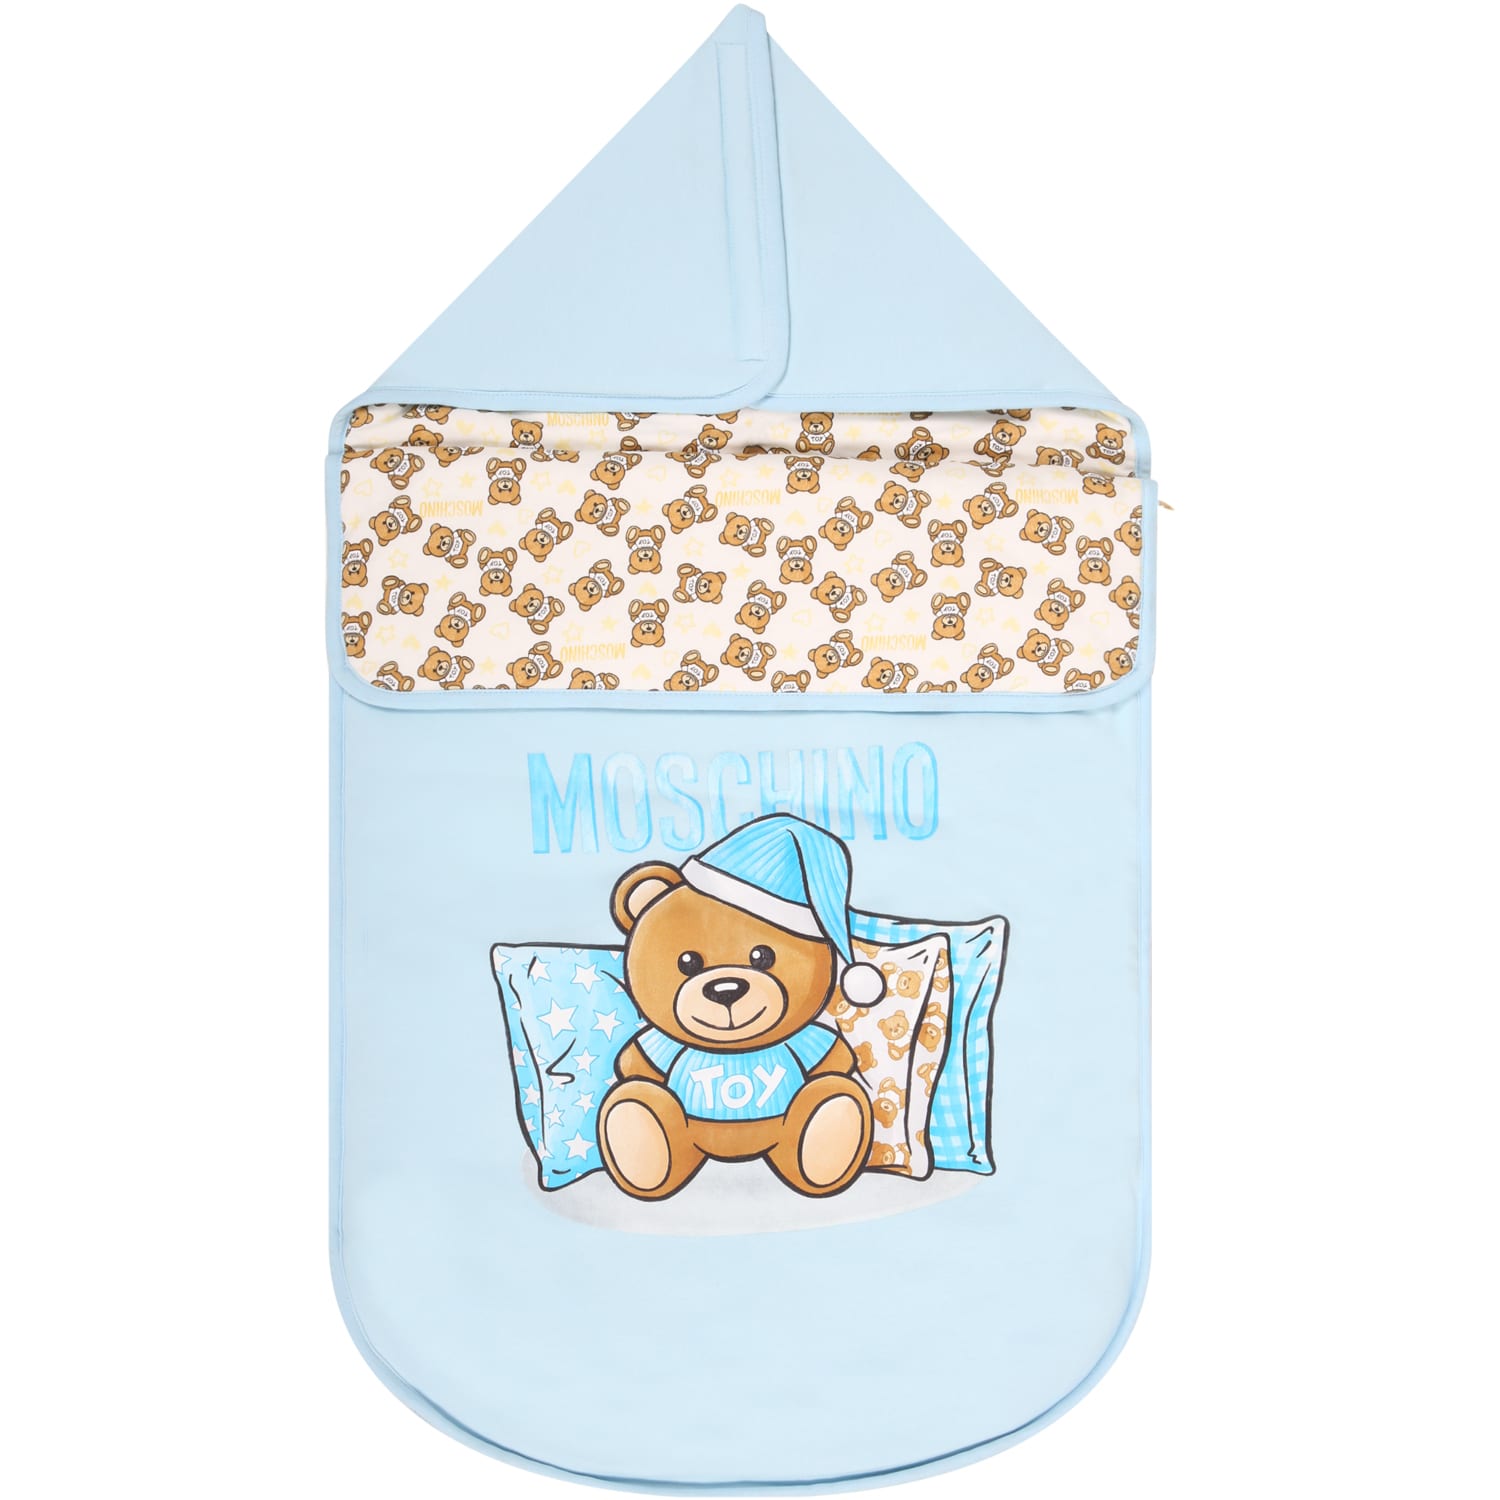 Moschino Light Blue Sleeping Bag For Baby Boy With Teddy Bears